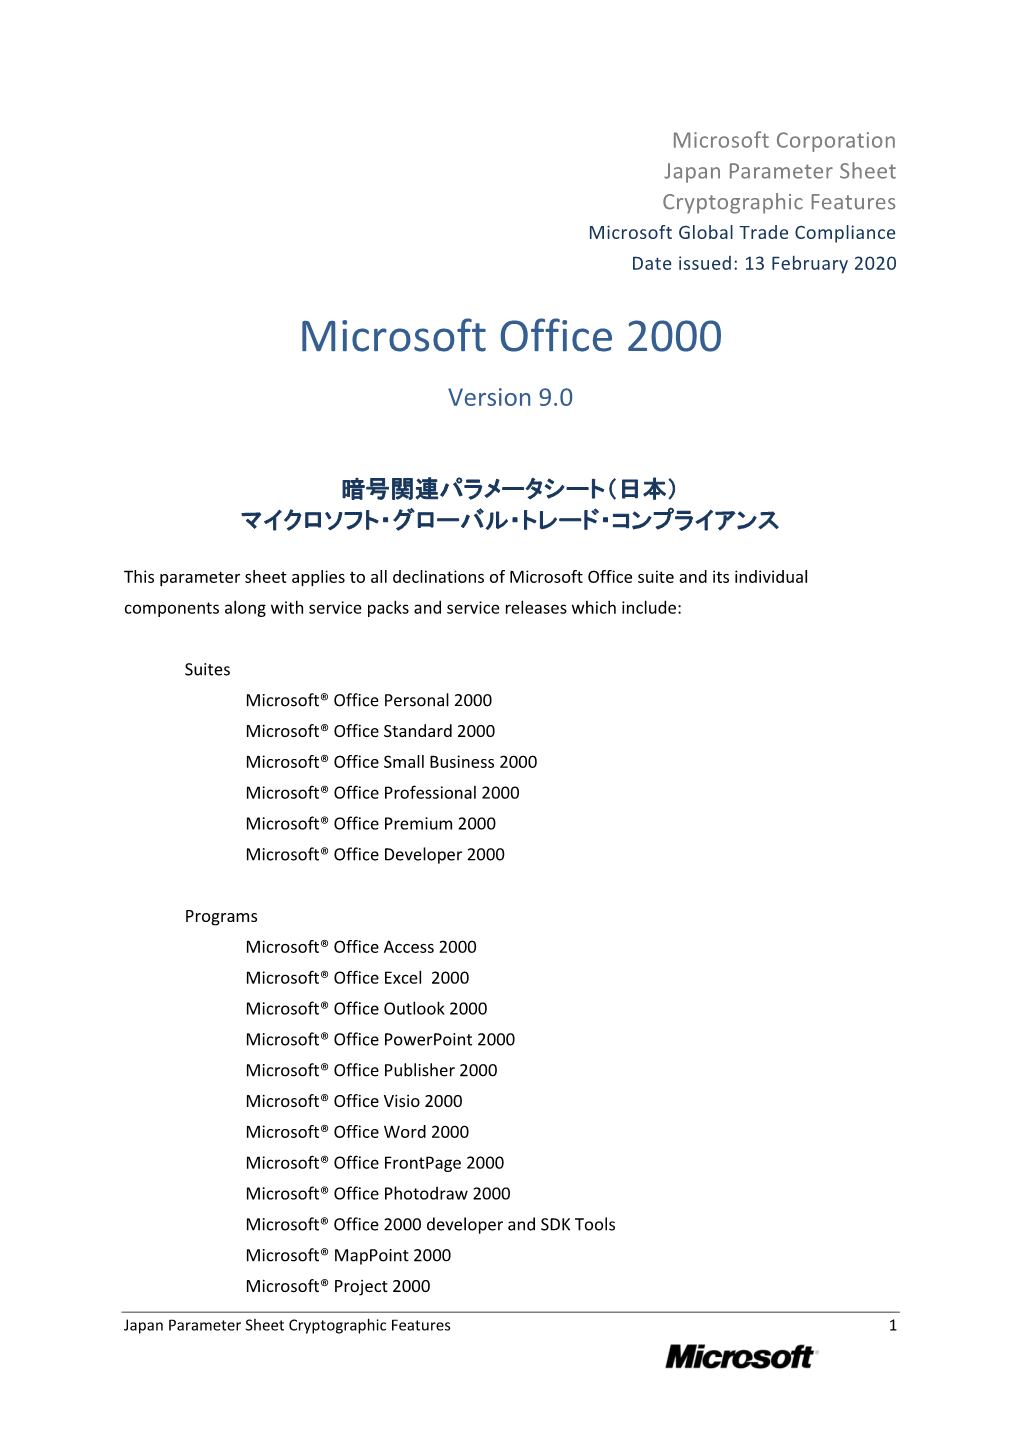 Microsoft Office 2000 Version 9.0